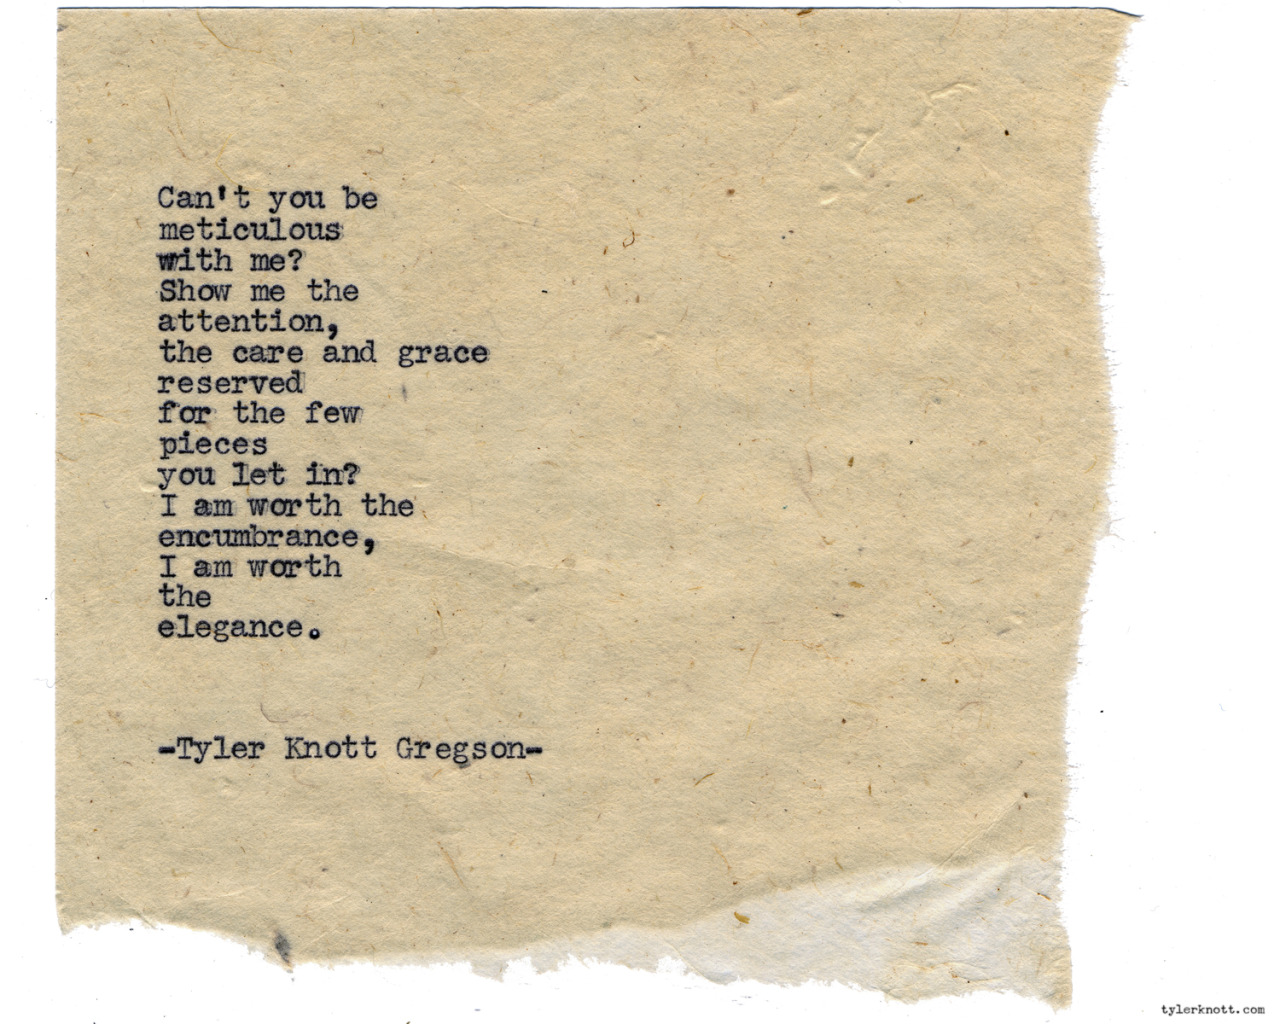 Tyler Knott Gregson — Typewriter Series #1247 by Tyler Knott Gregson...